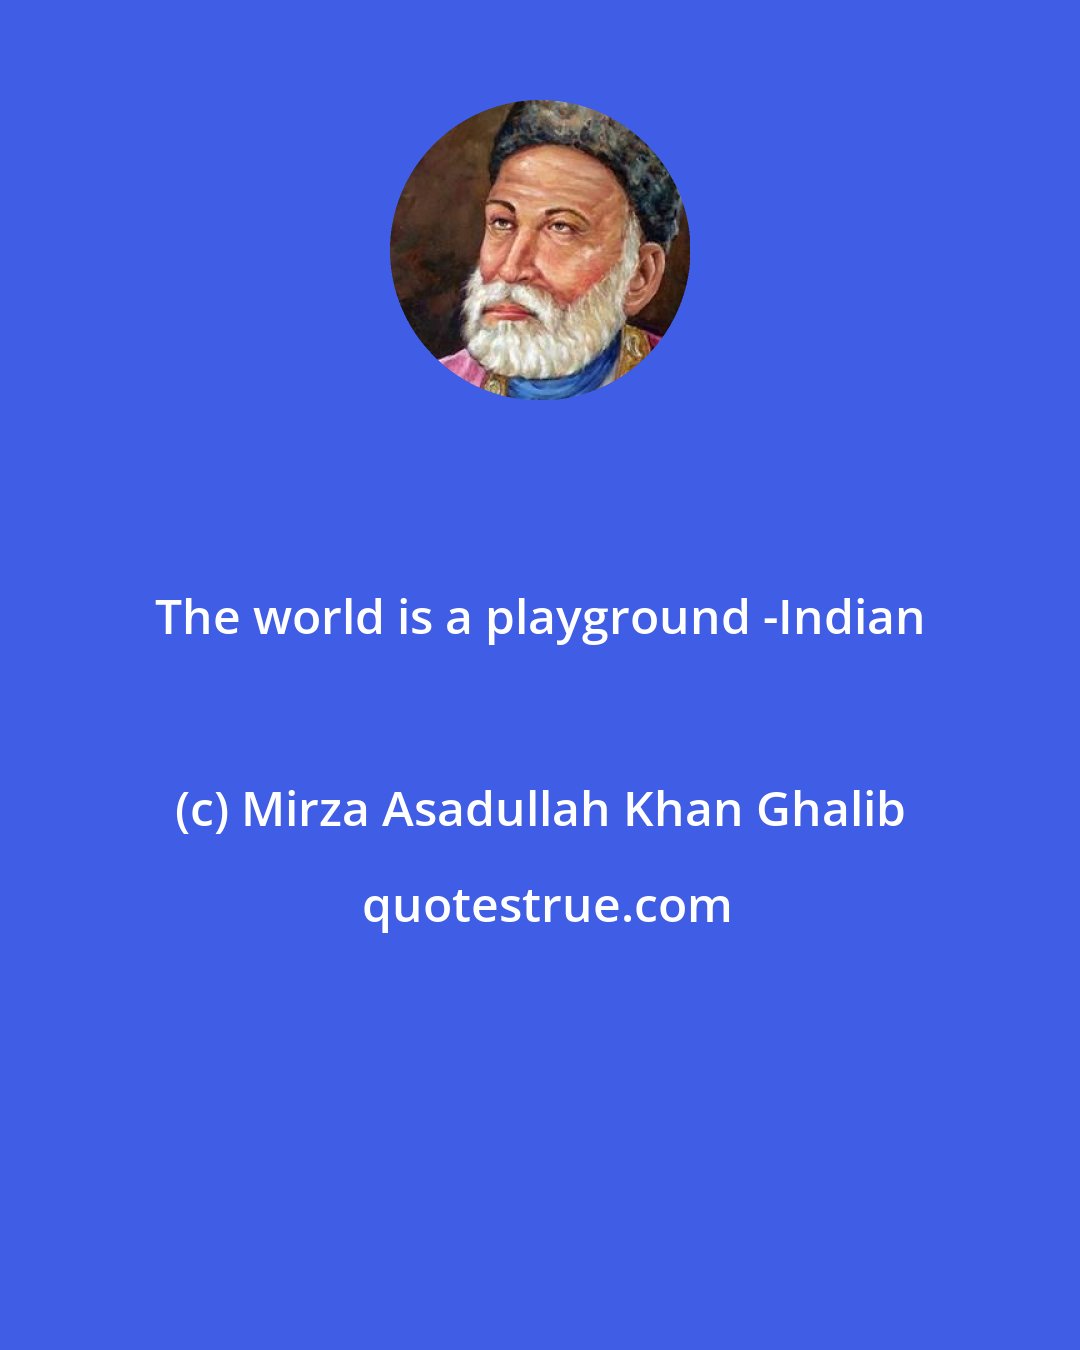 Mirza Asadullah Khan Ghalib: The world is a playground -Indian